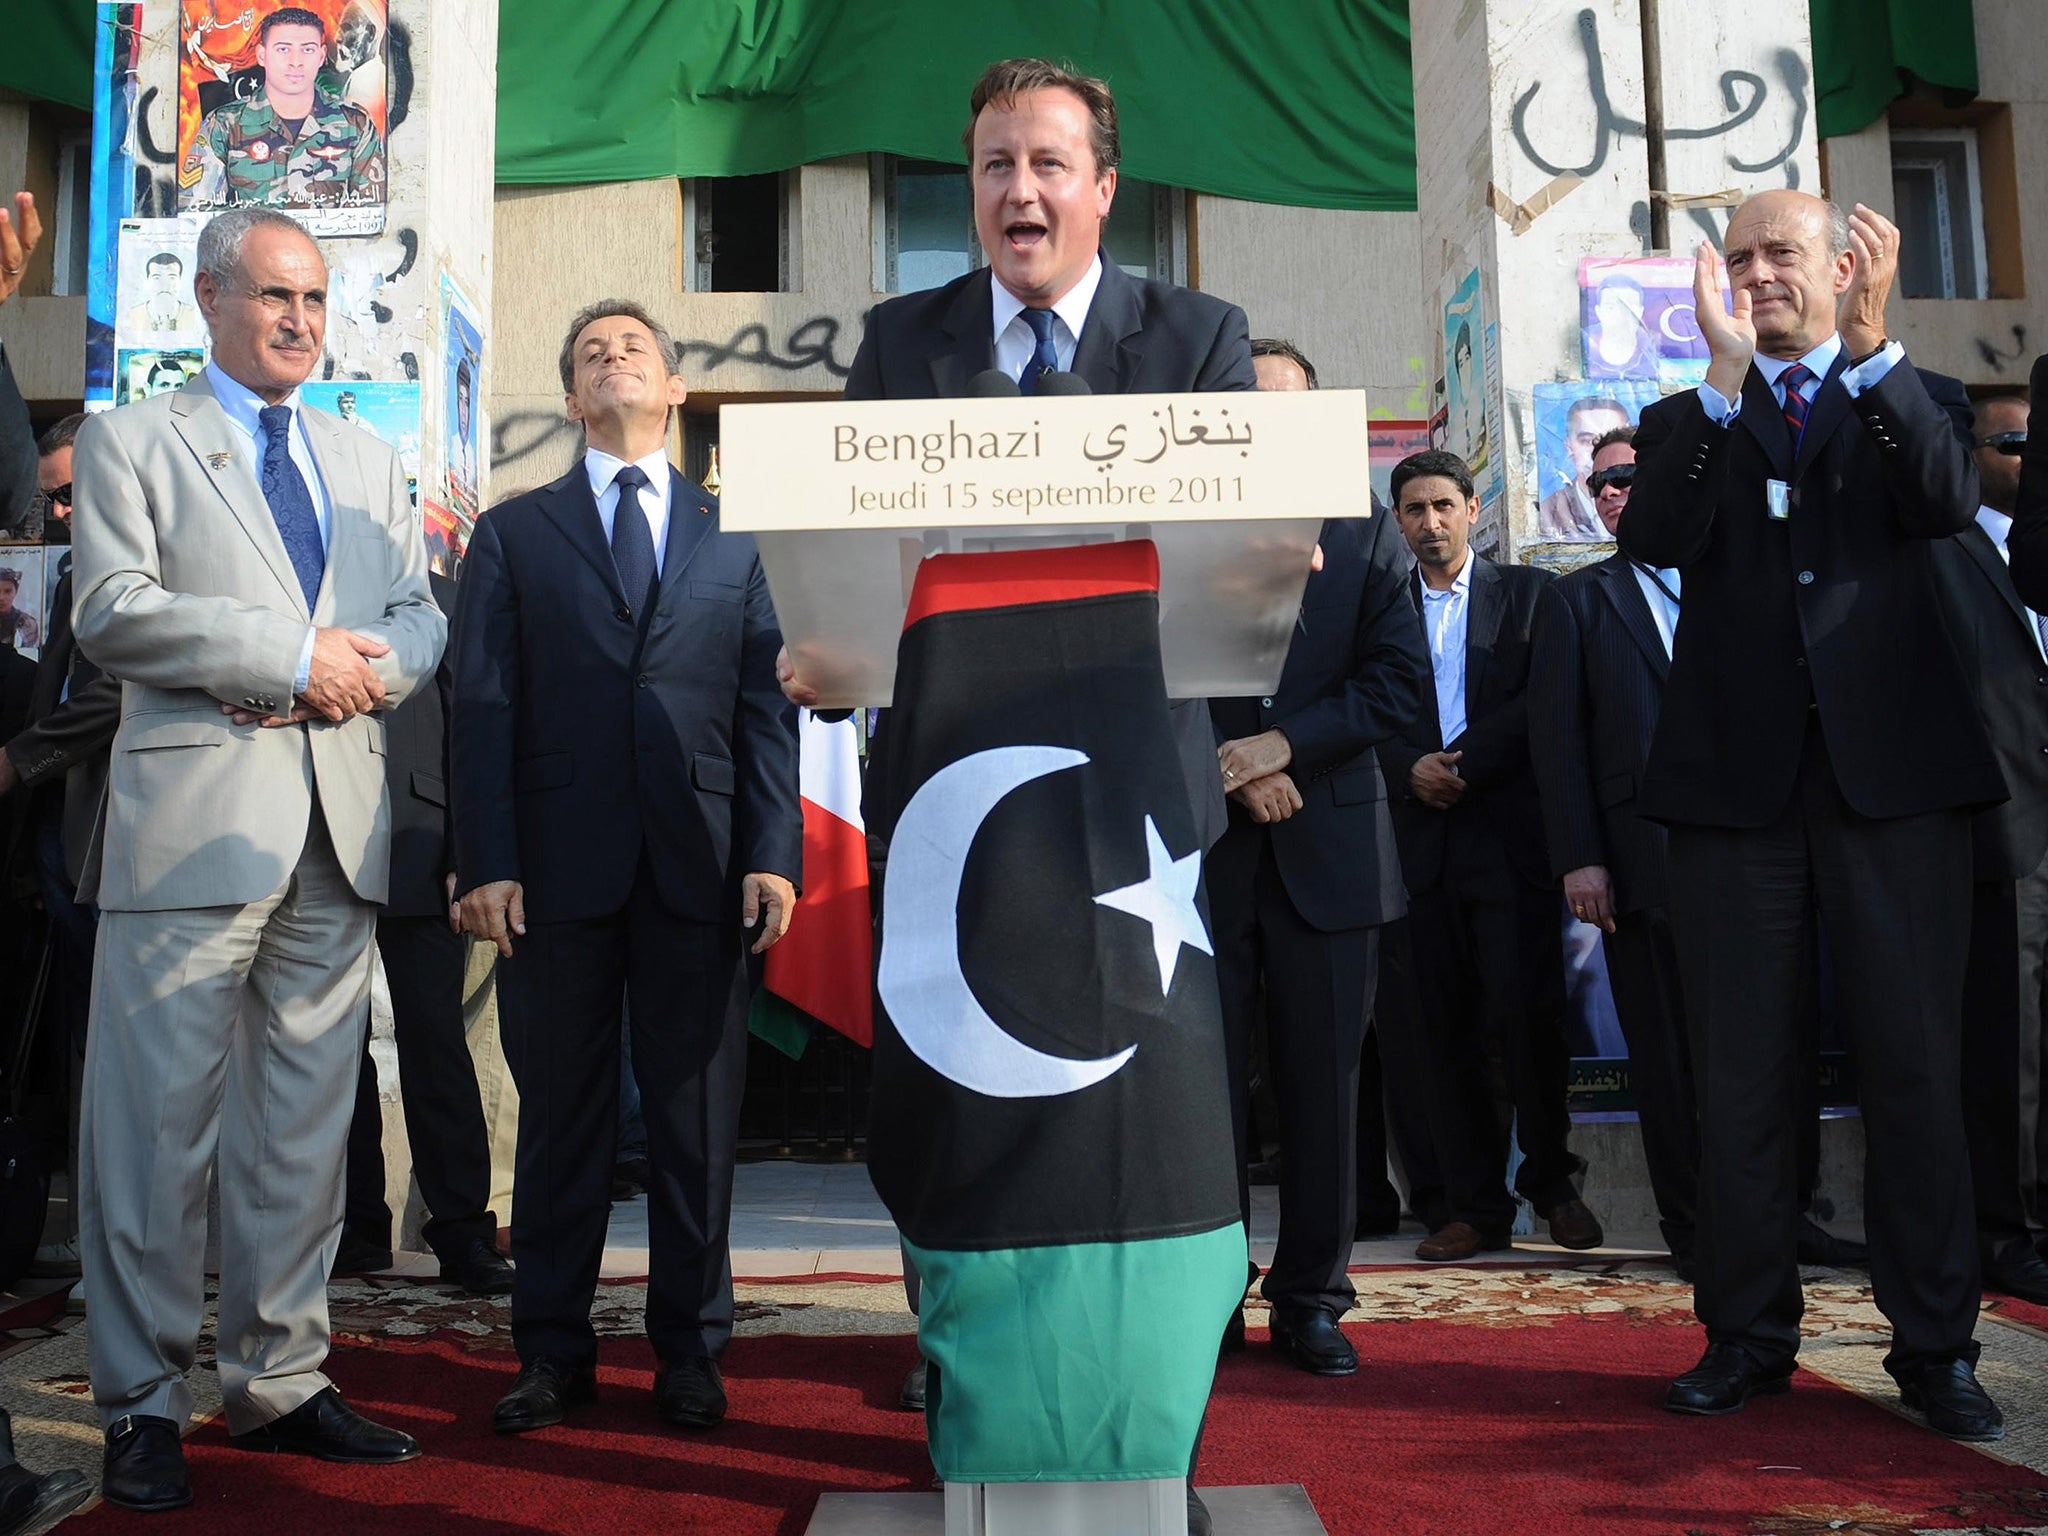 David Cameron in Libya after Gaddafi's fall (Getty)